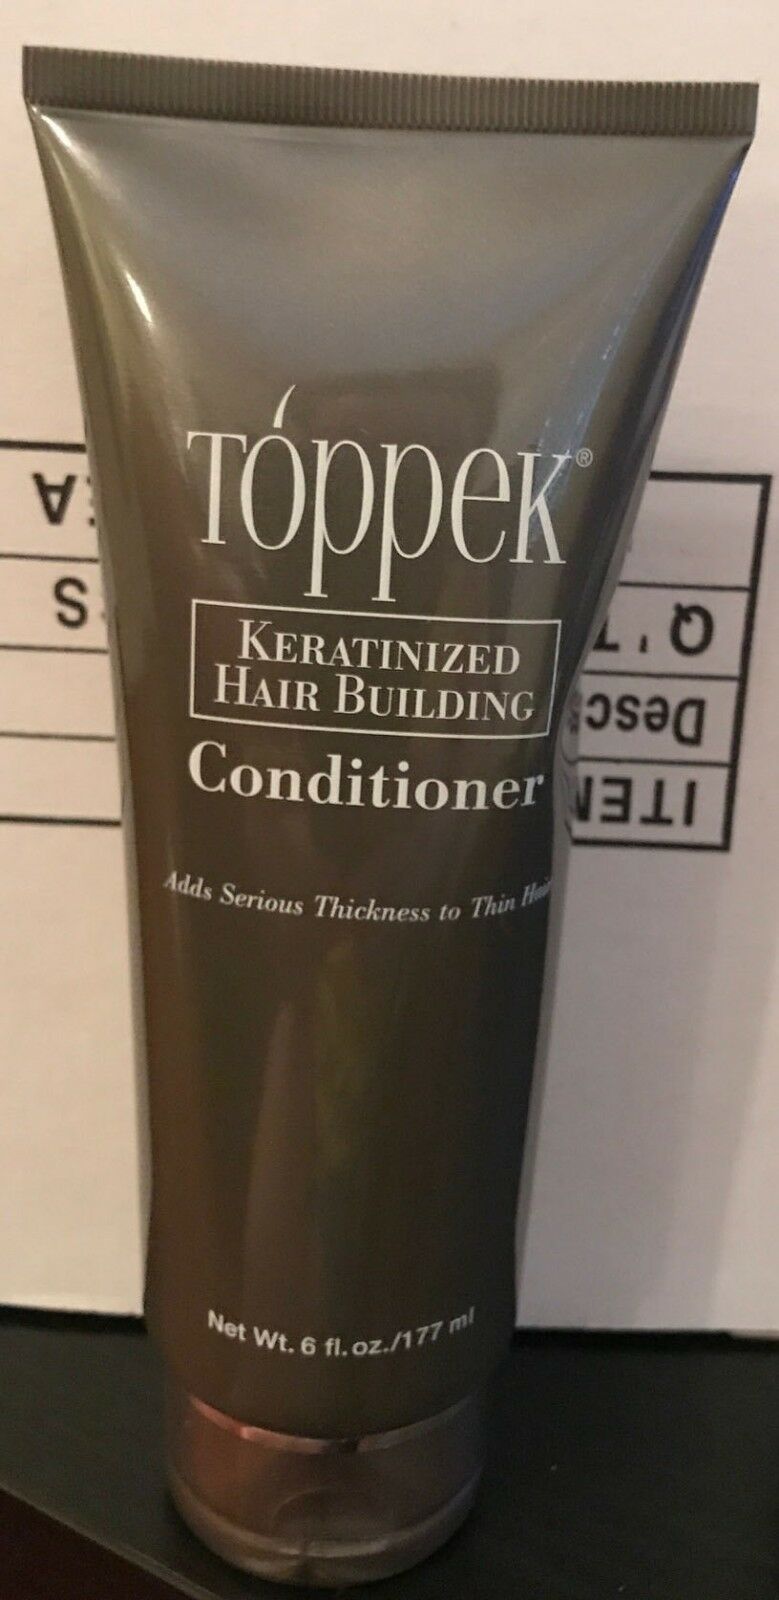 Toppik Keratinized hair building conditioner 6 oz 177 ml - $15.84